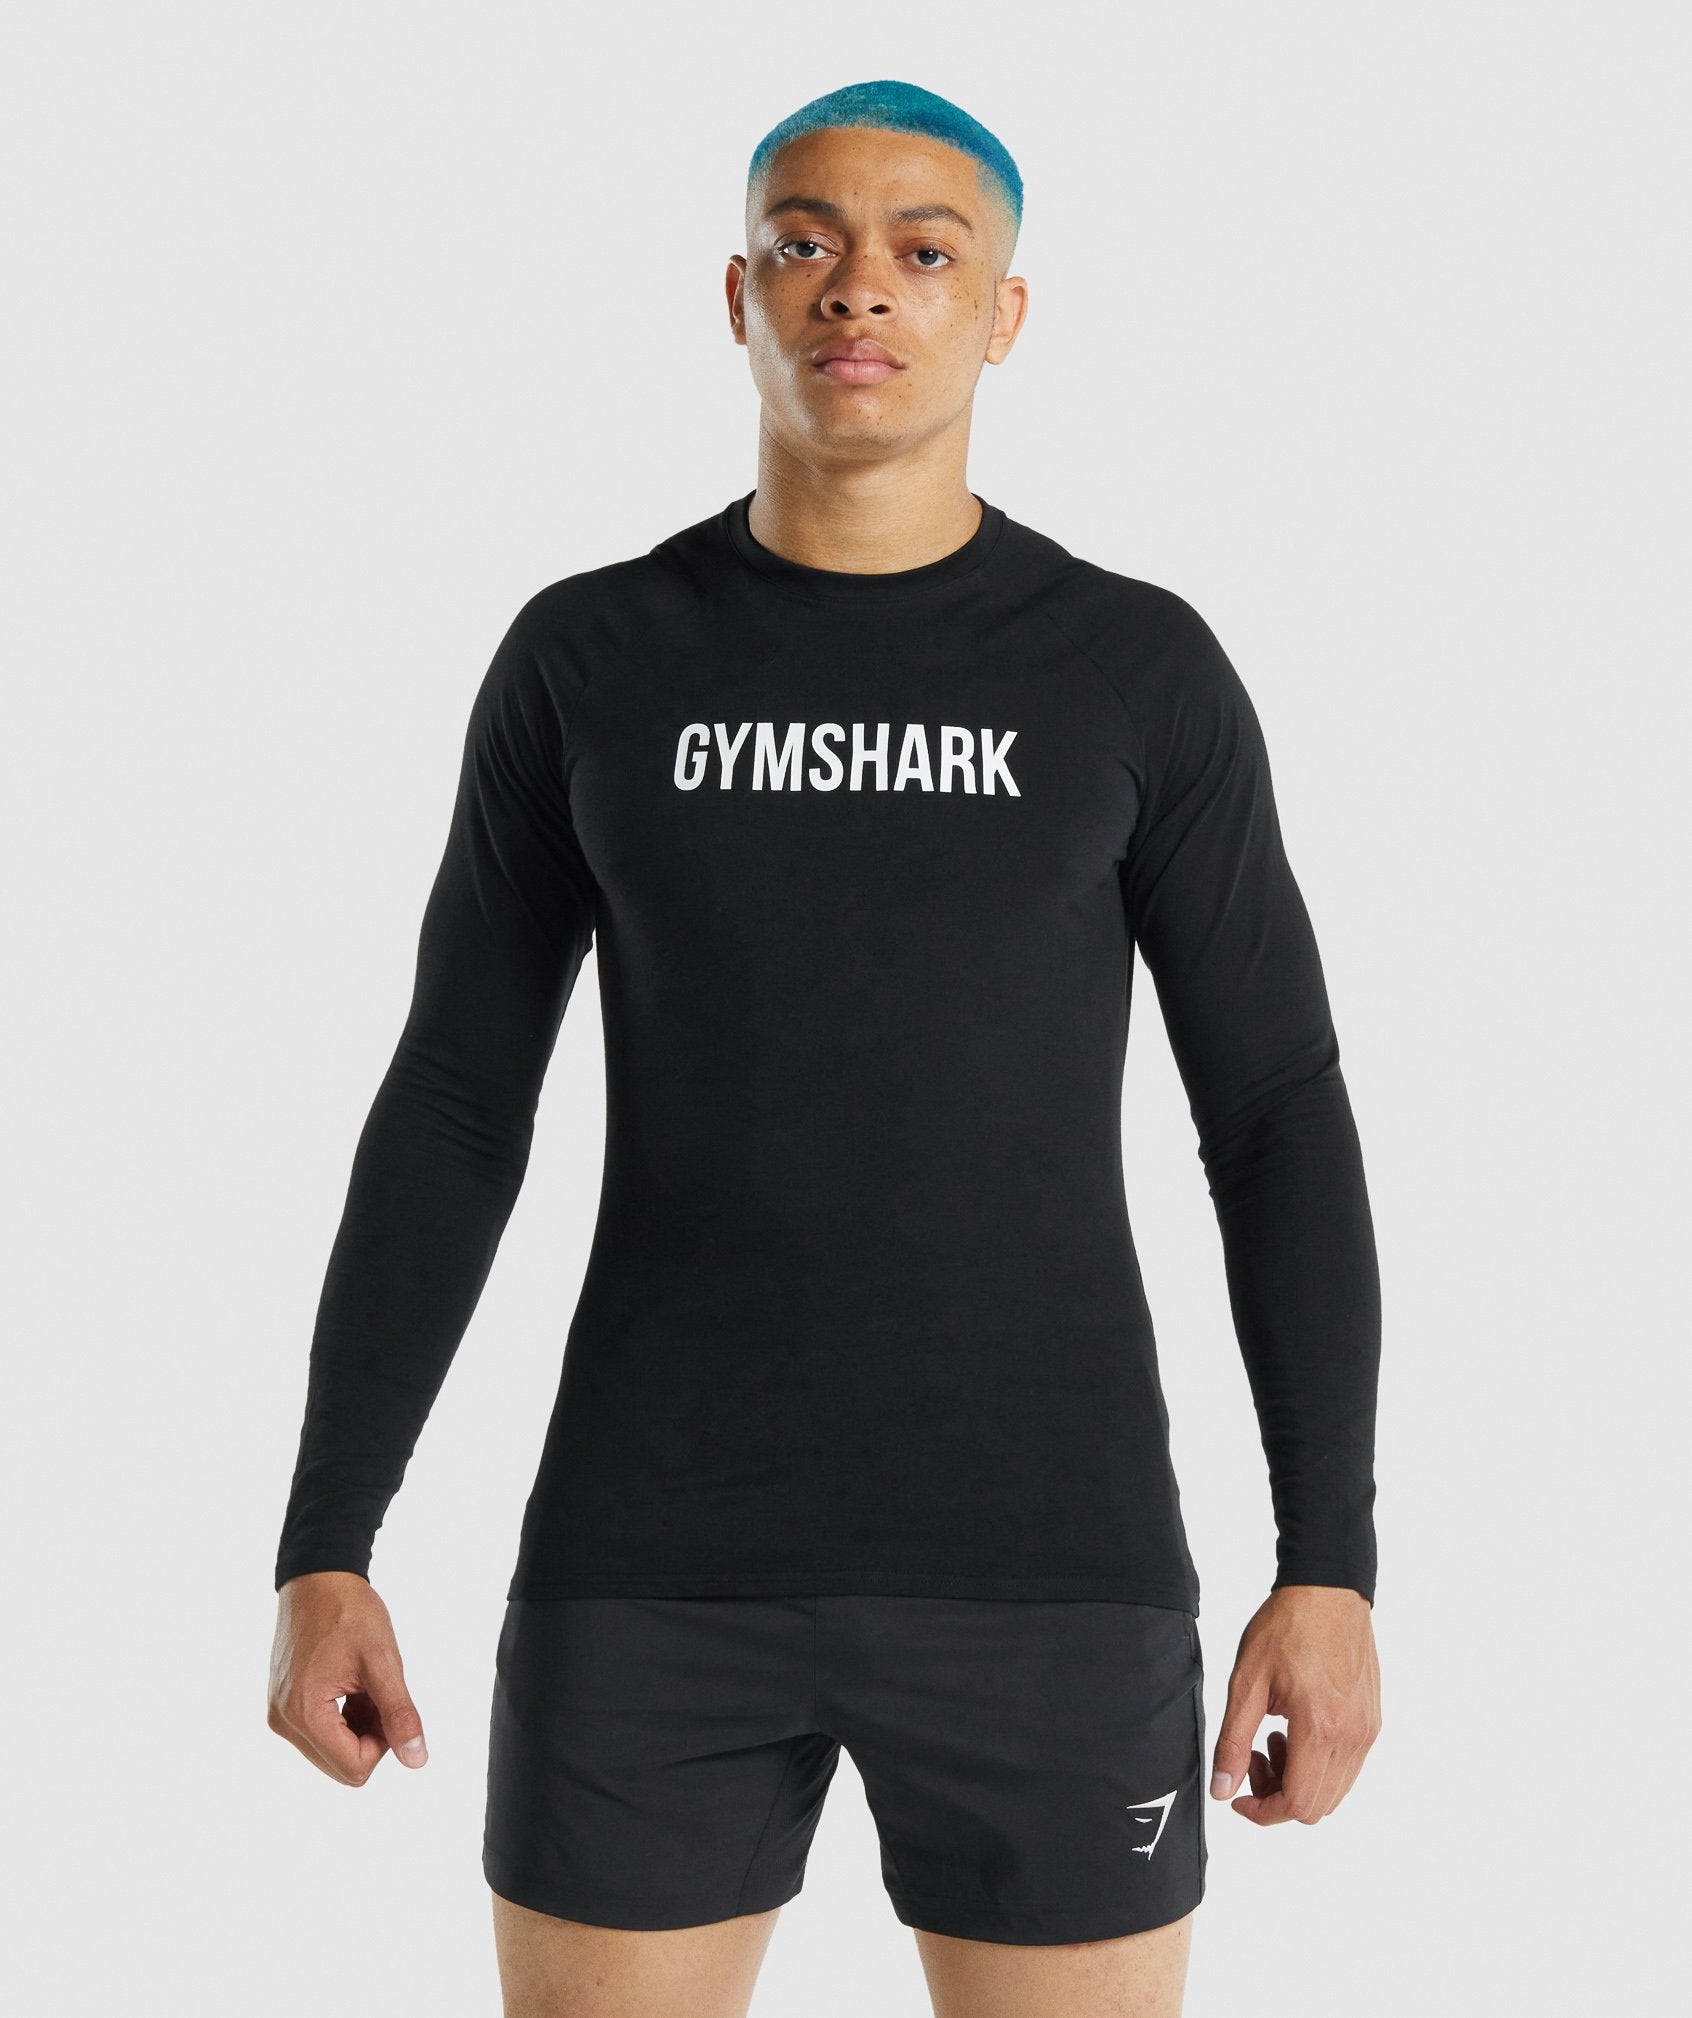 Gymshark Apollo black crew muscle fit short sleeve tee shirt XL